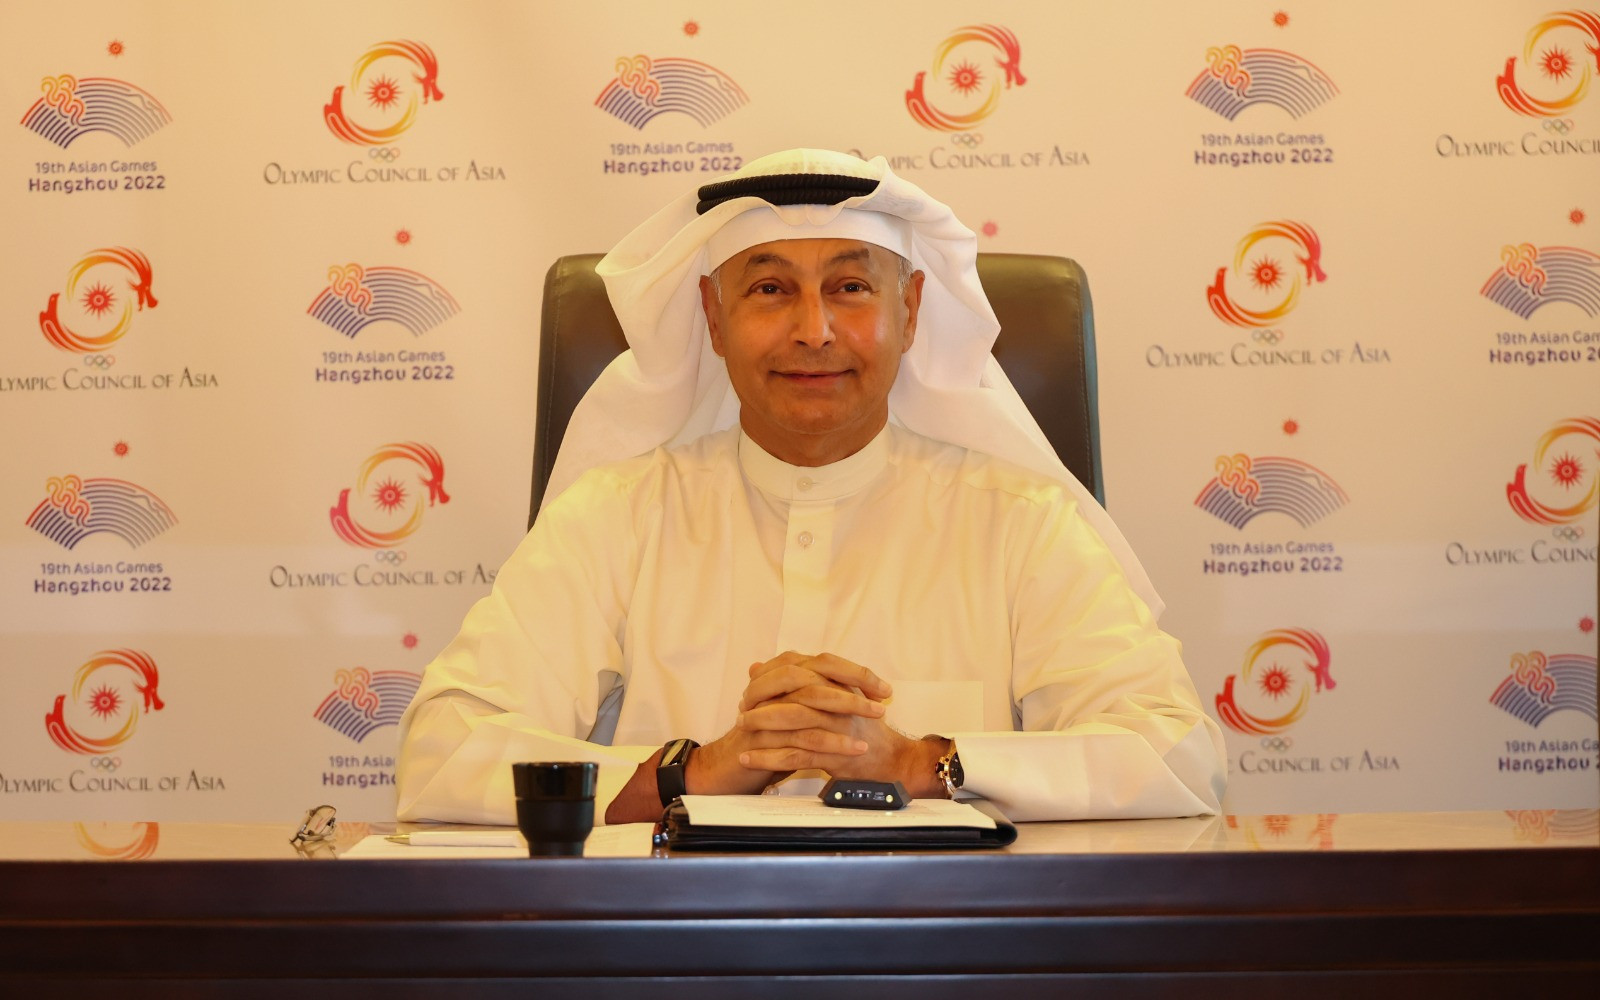 Husain Al-Musallam believes the Asian Games Fun Run improves can promote friendship and tolerance ©OCA